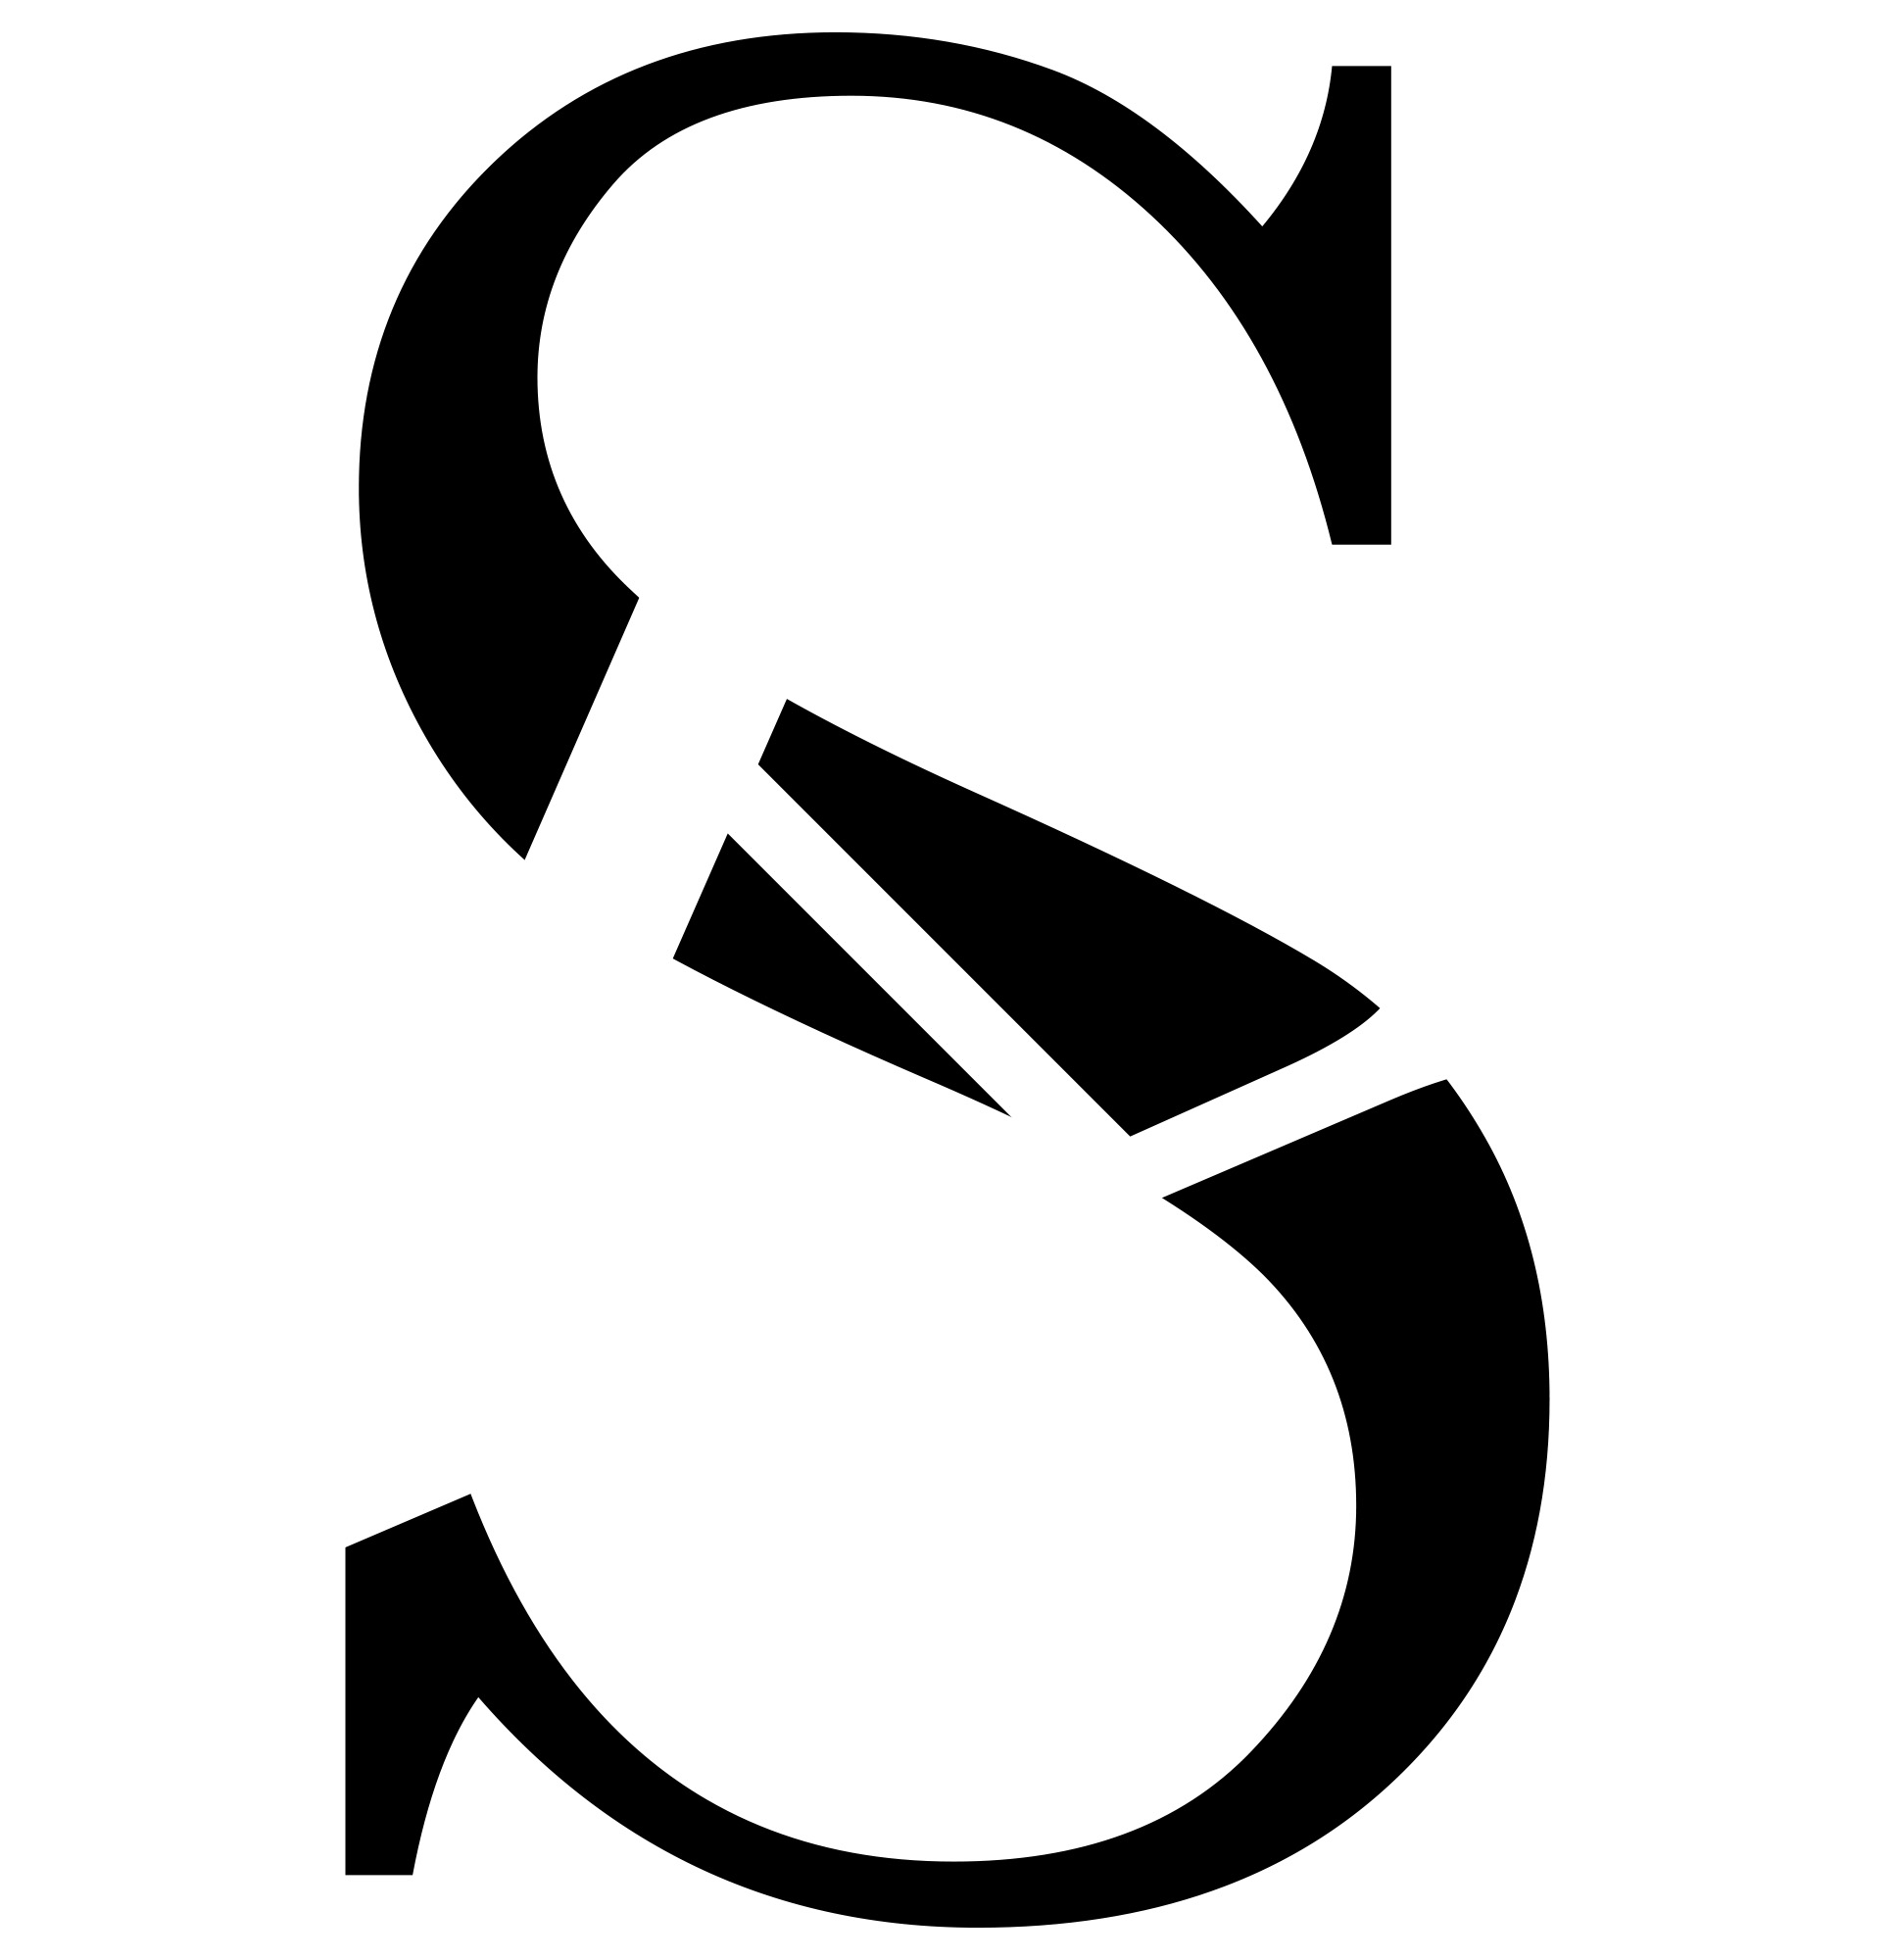 S Letter Designs Free Download Best S Letter Designs On Clipartmag Com